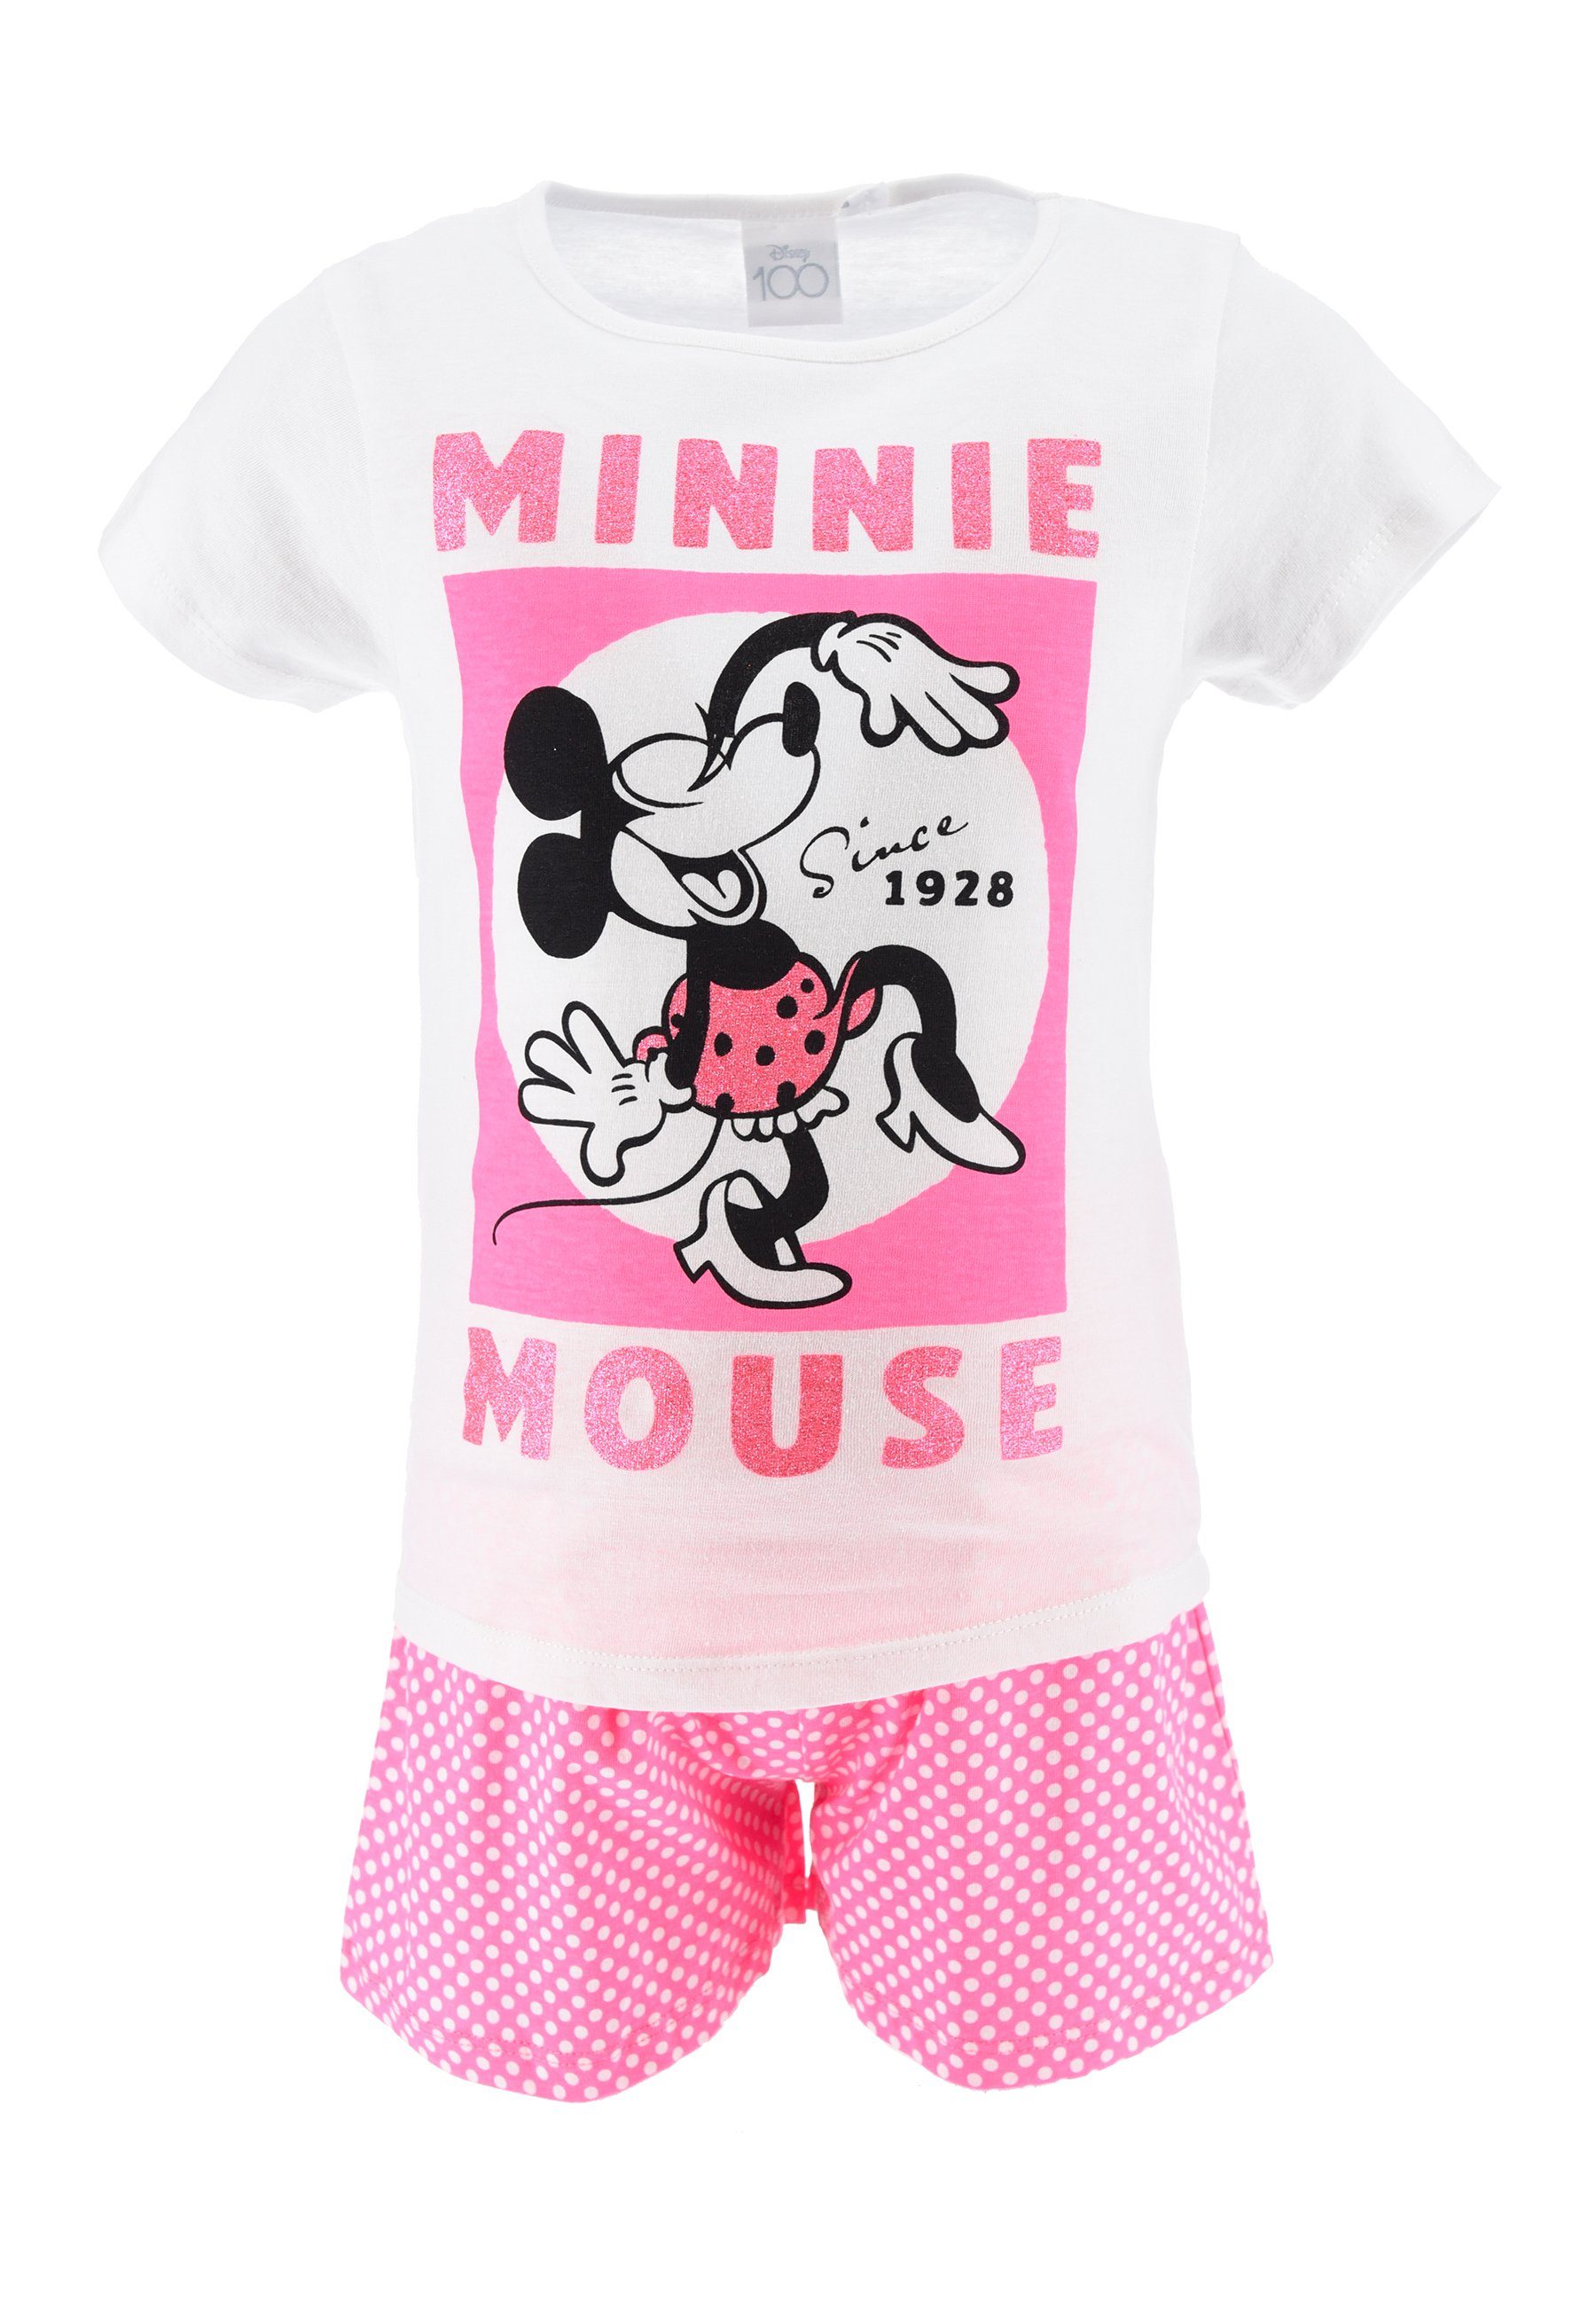 tlg) Pyjama Mouse Mädchen Weiß Minnie Shorty (2 Disney Schlafanzug